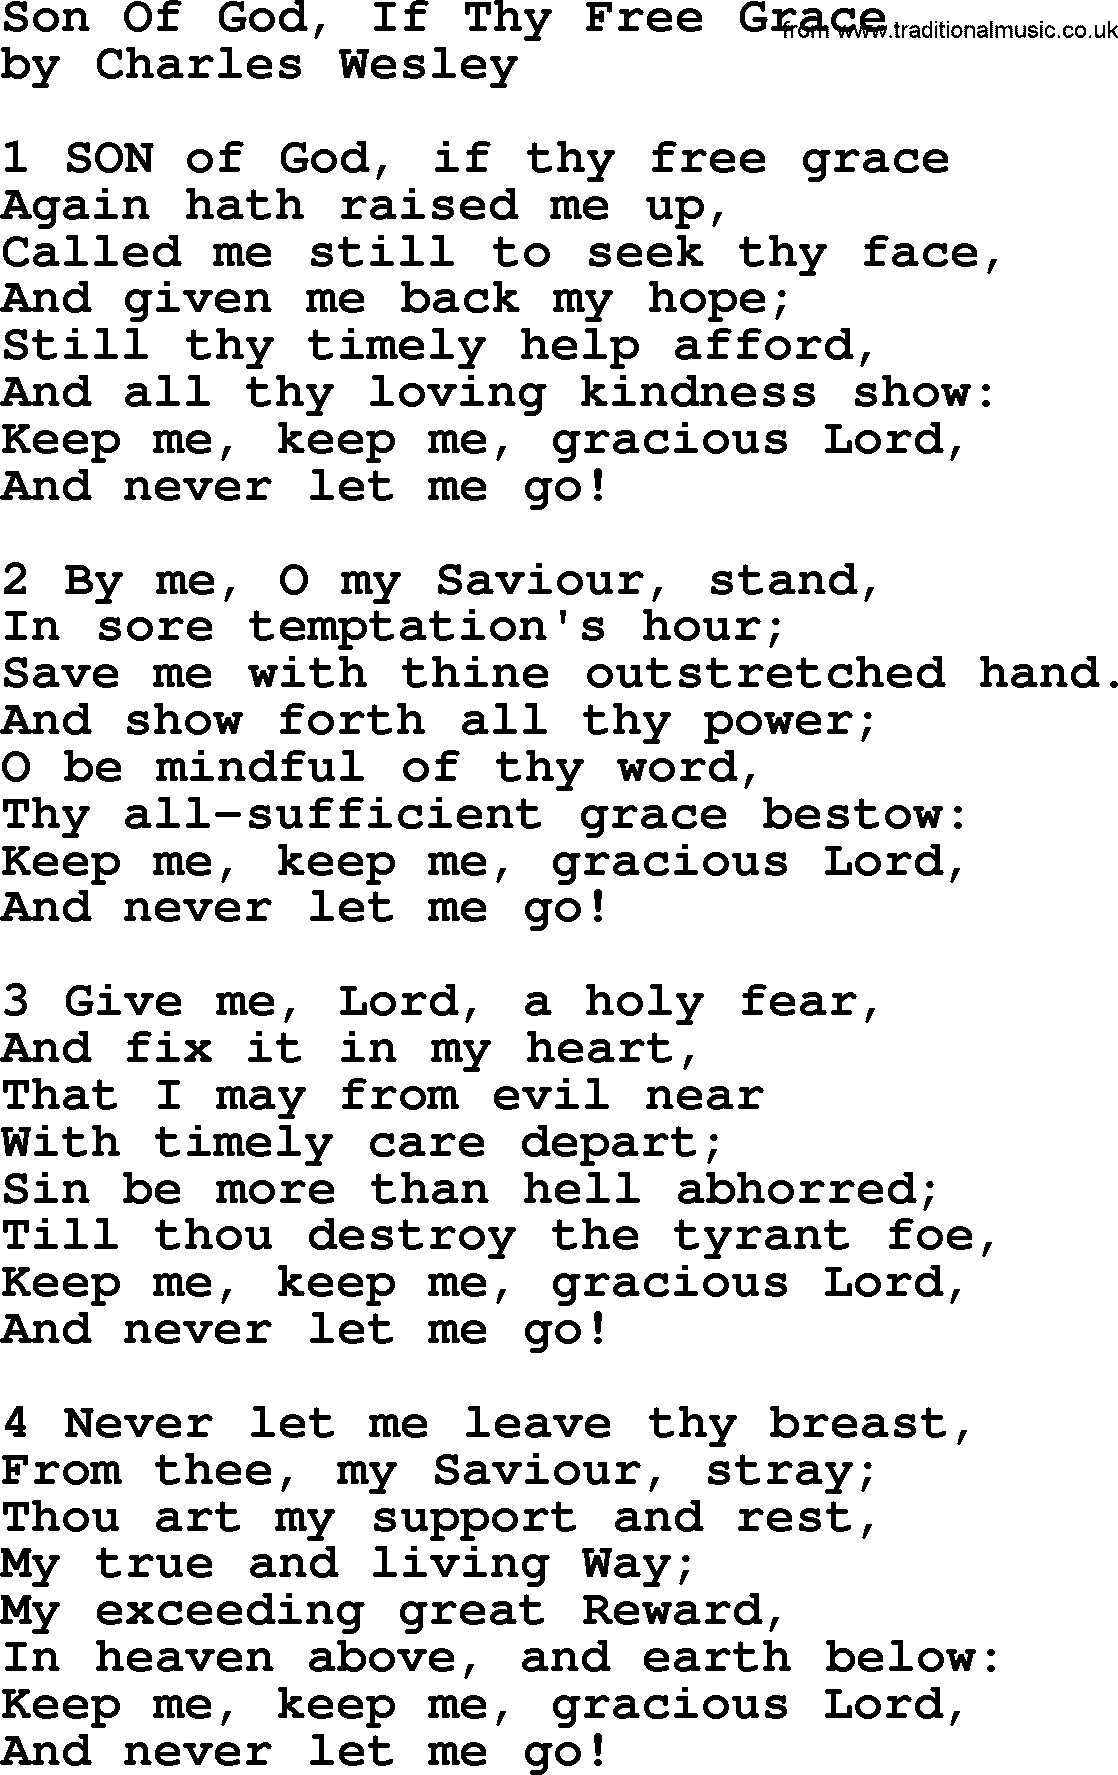 Charles Wesley hymn: Son Of God, If Thy Free Grace, lyrics